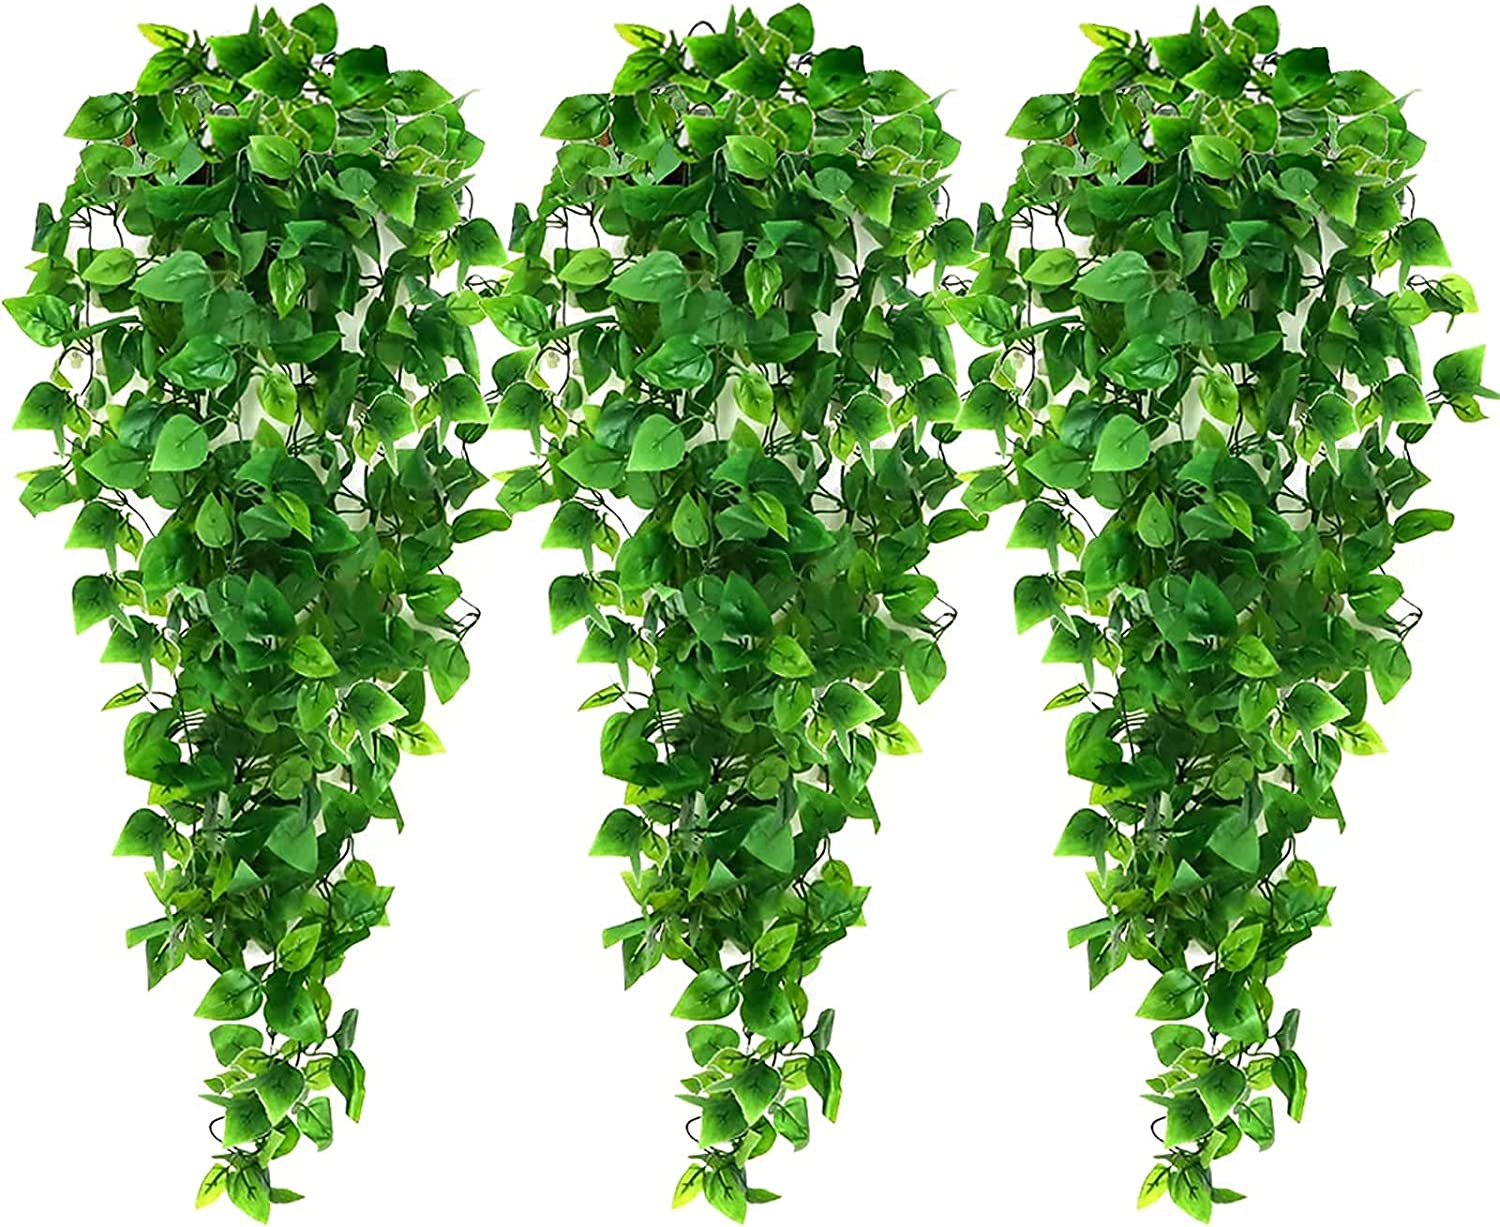 Ageomet Greenery Vines Outdoor Artificial Plants, 3-Pack